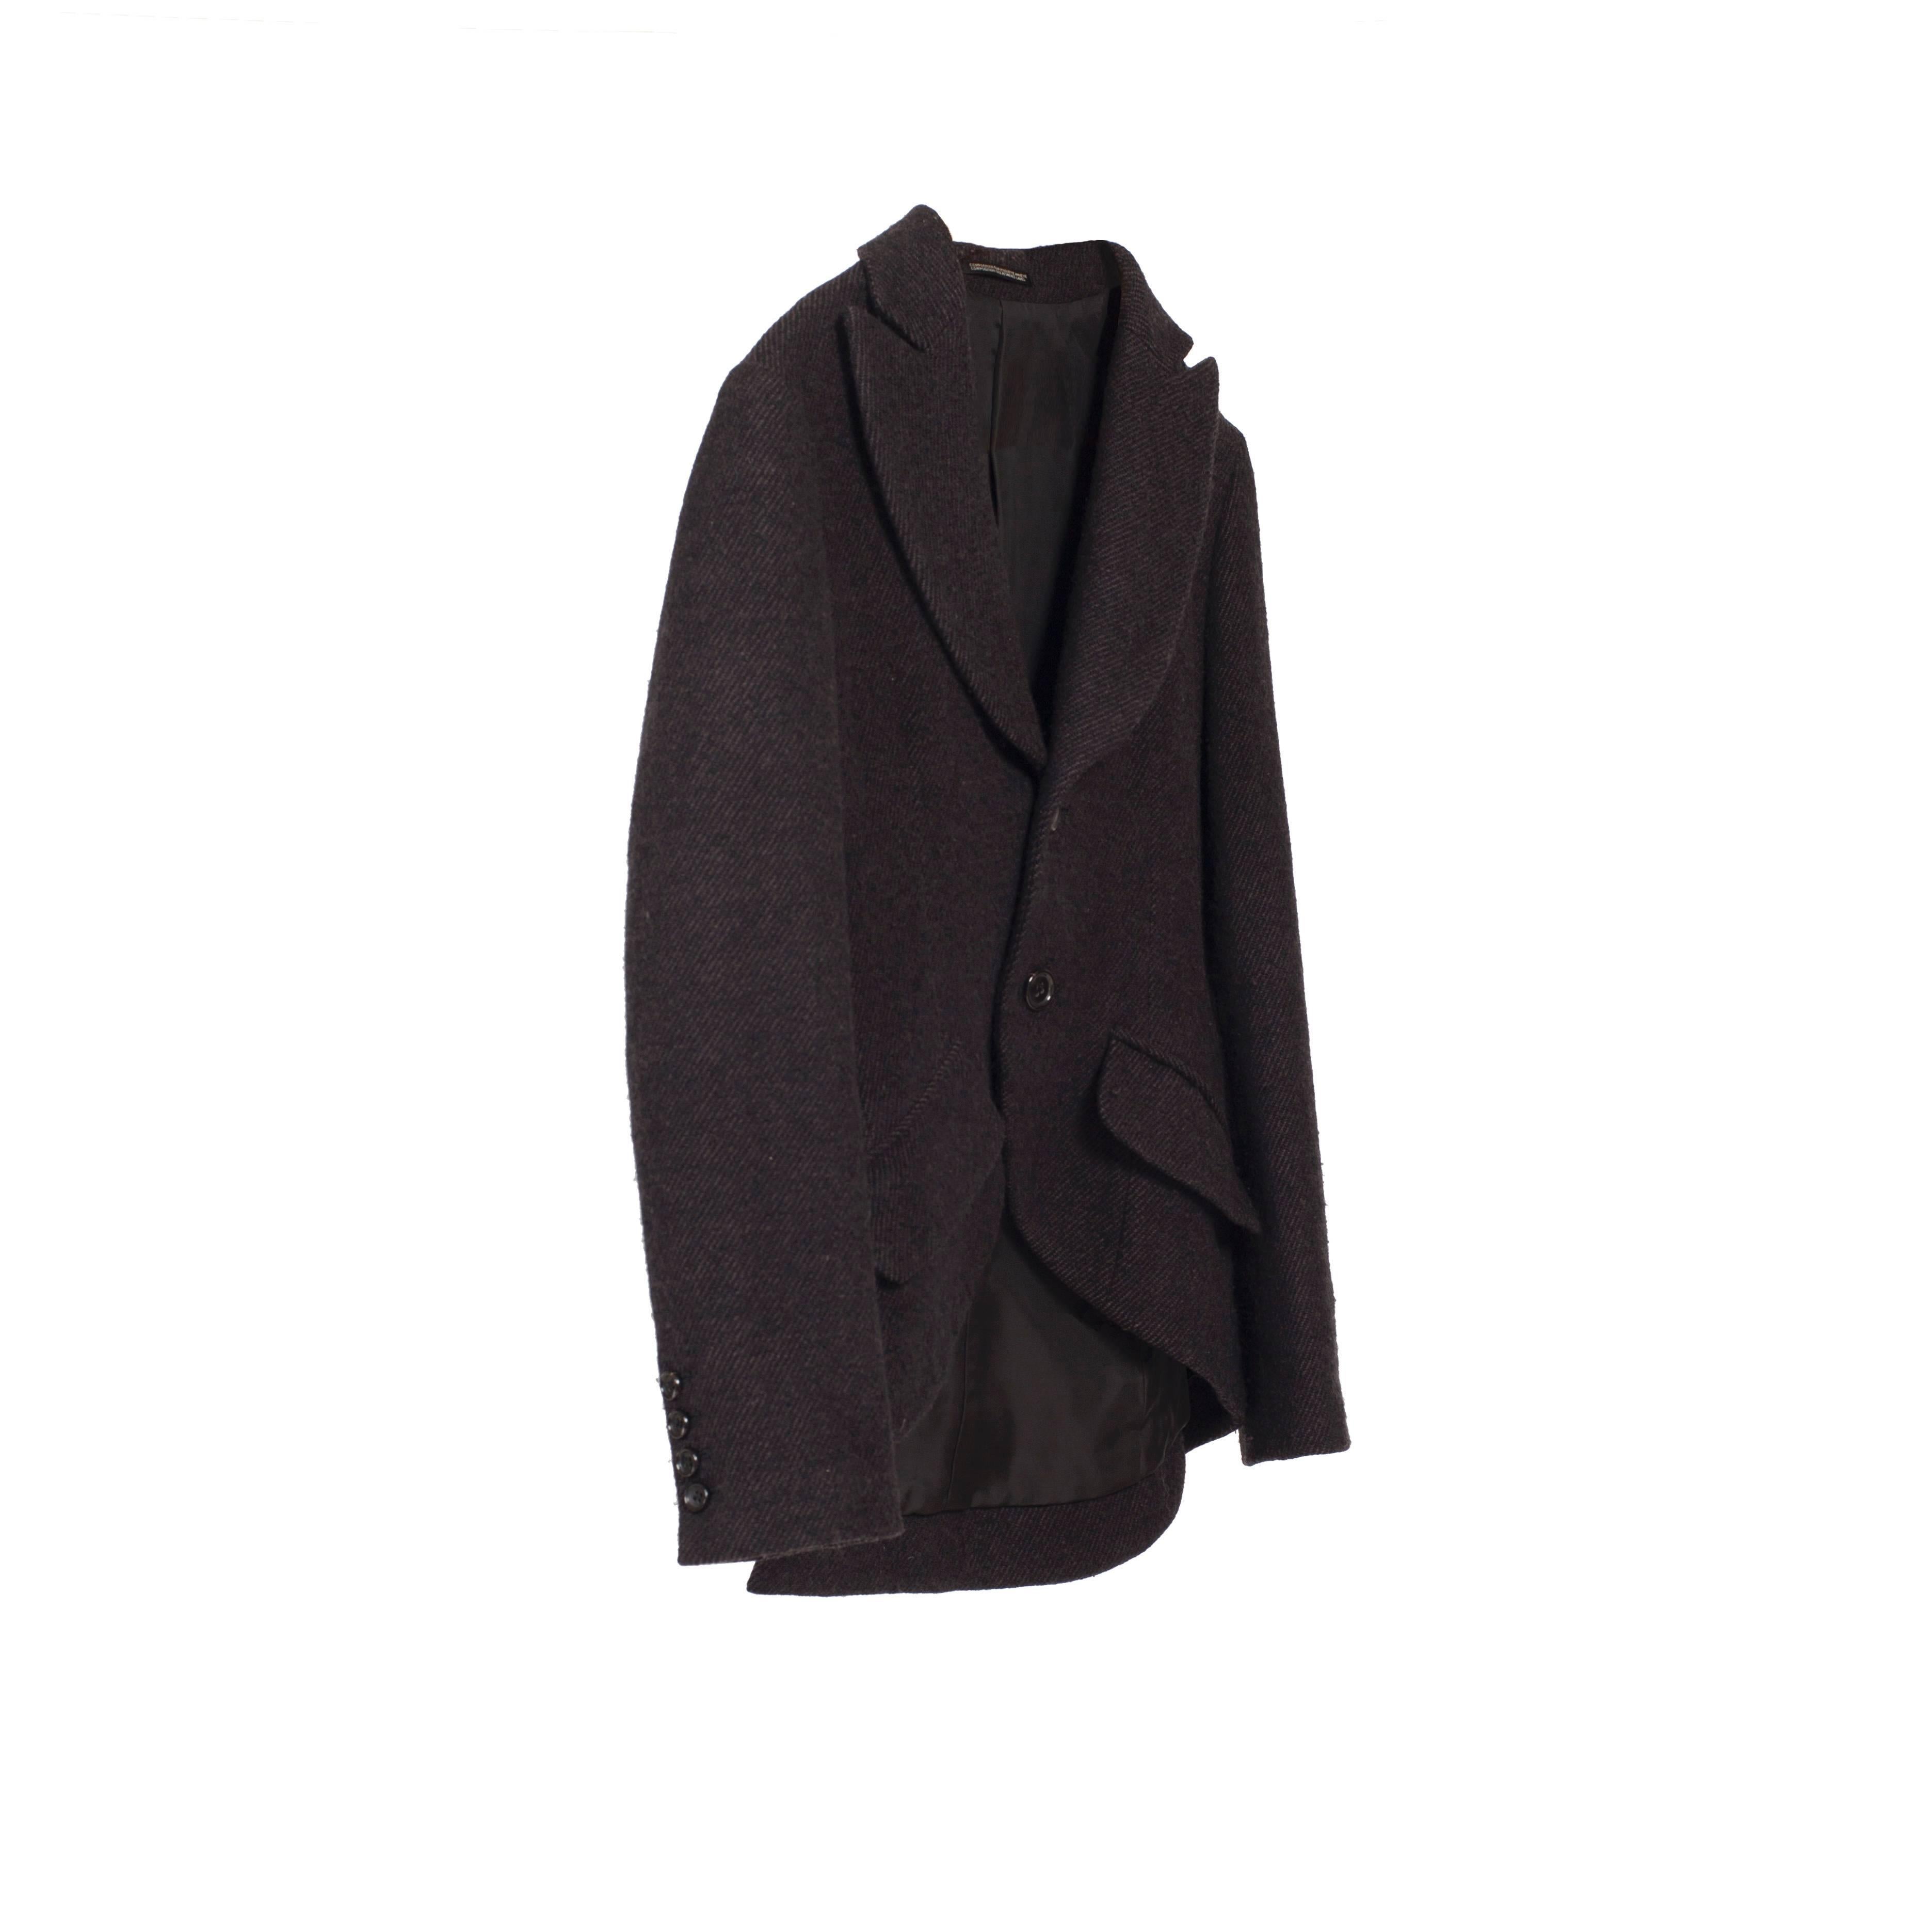 Yohji Yamamoto +Noir wool asymmetrical back side detail jacket. 
Size : 2 (Fits like Medium)
Shoulder : 45 cm
Length : 71 cm
Sleeve : 59 cm
